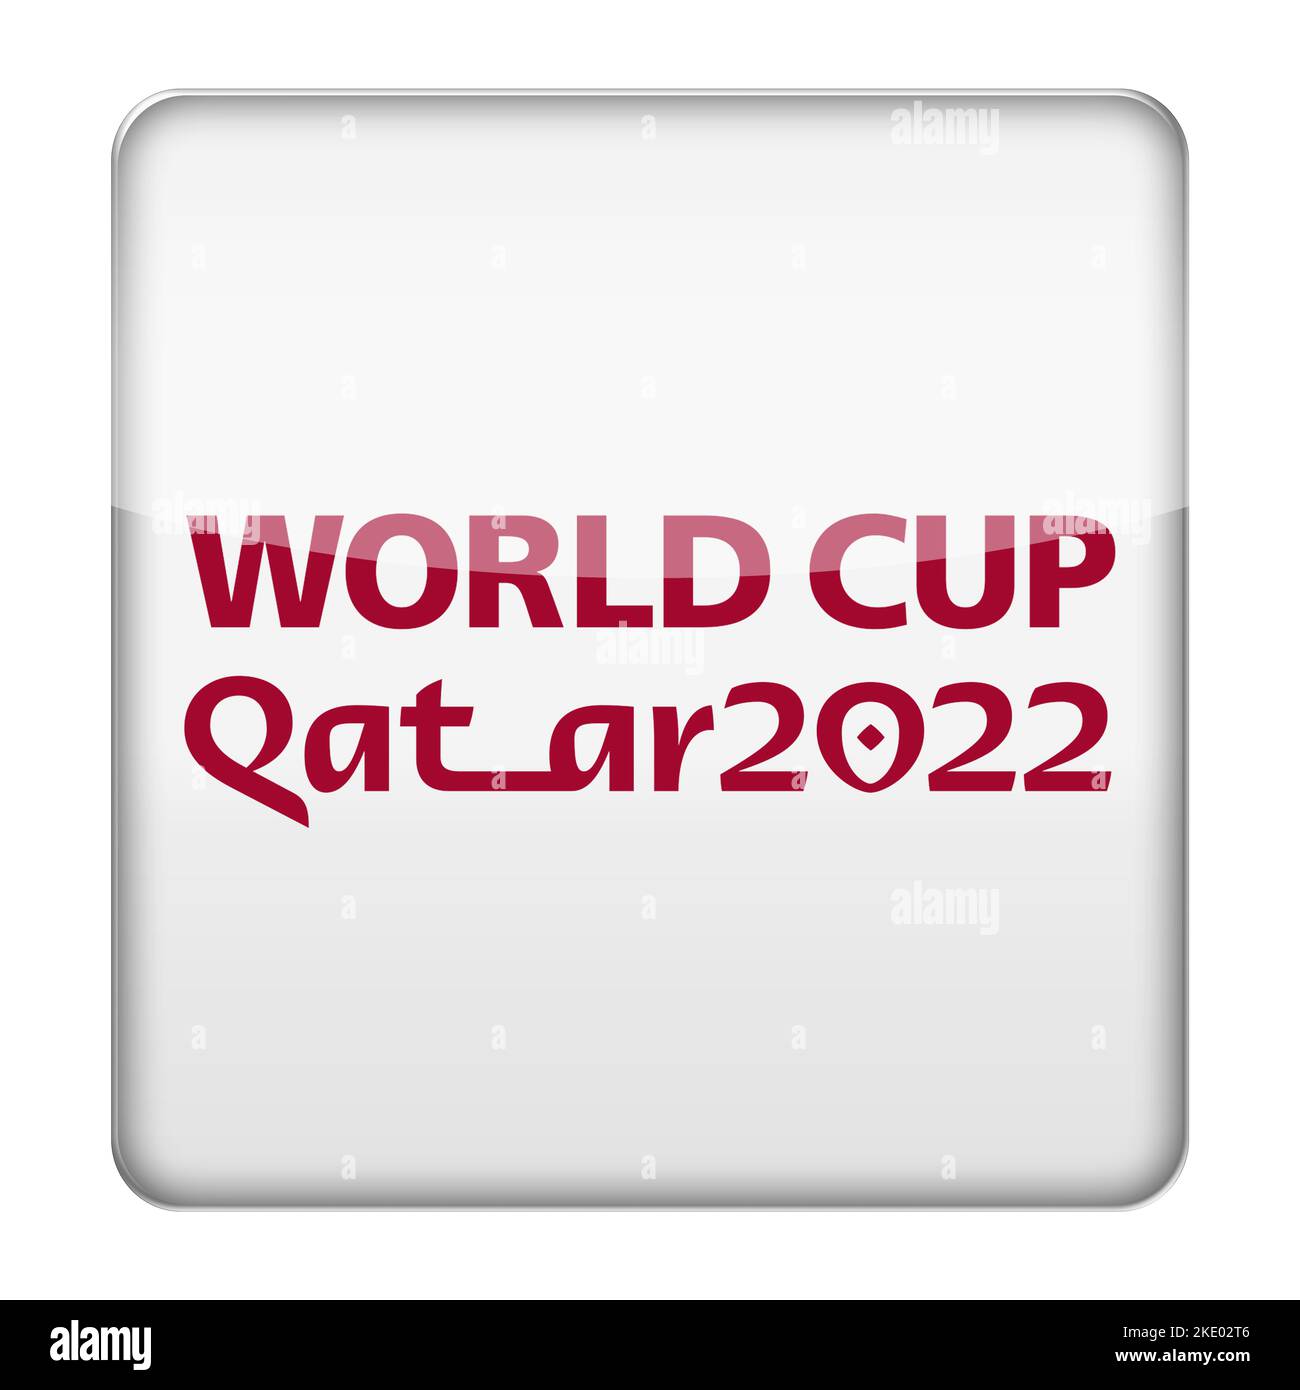 Football World Cup in Qatar 2022 Stock Photo